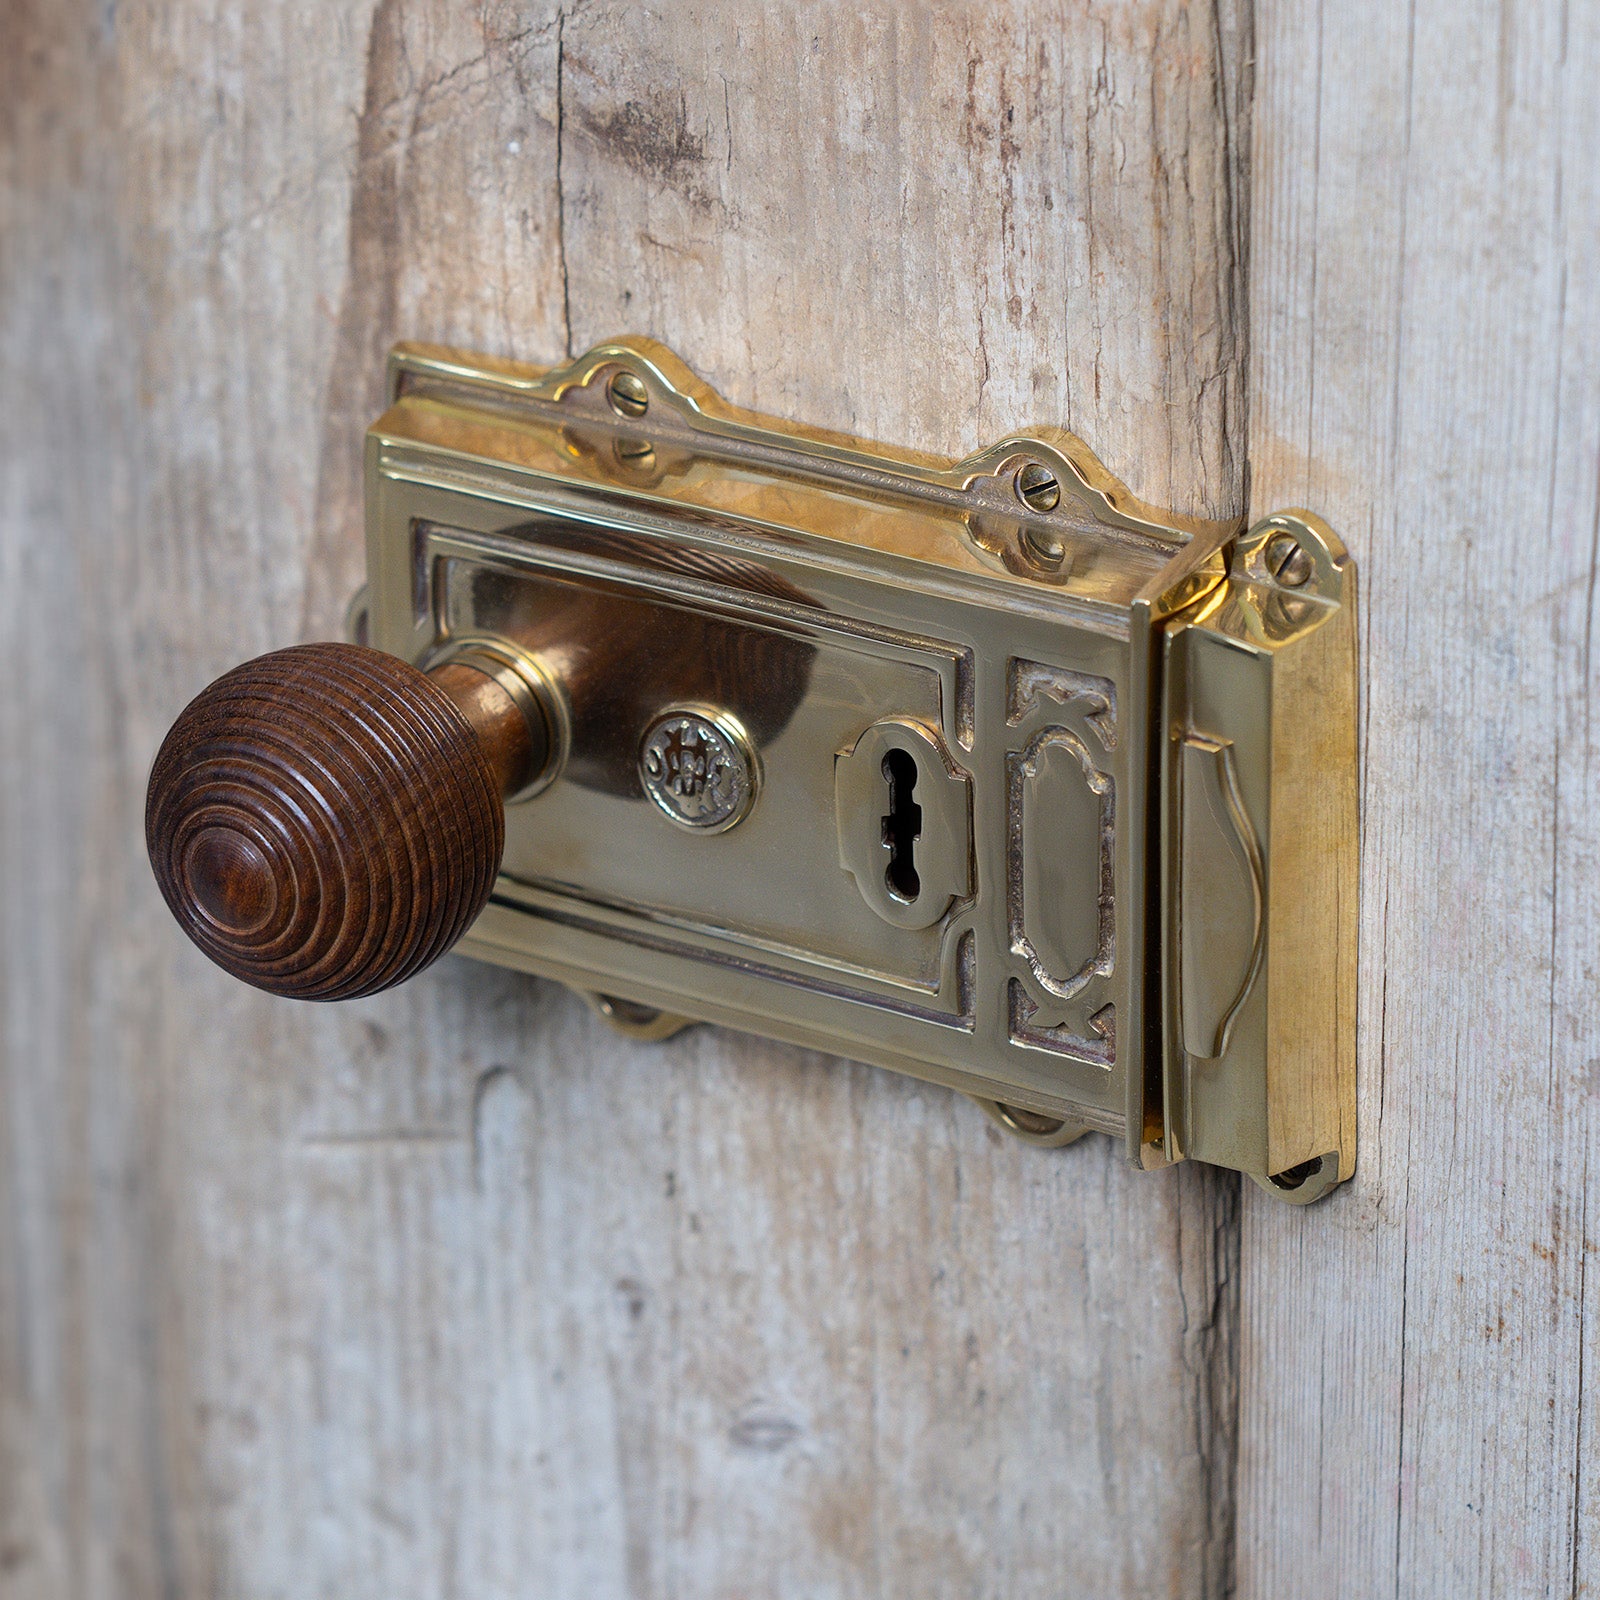 SHOW Lifestyle image of Ornate Brass Rim Lock on wood